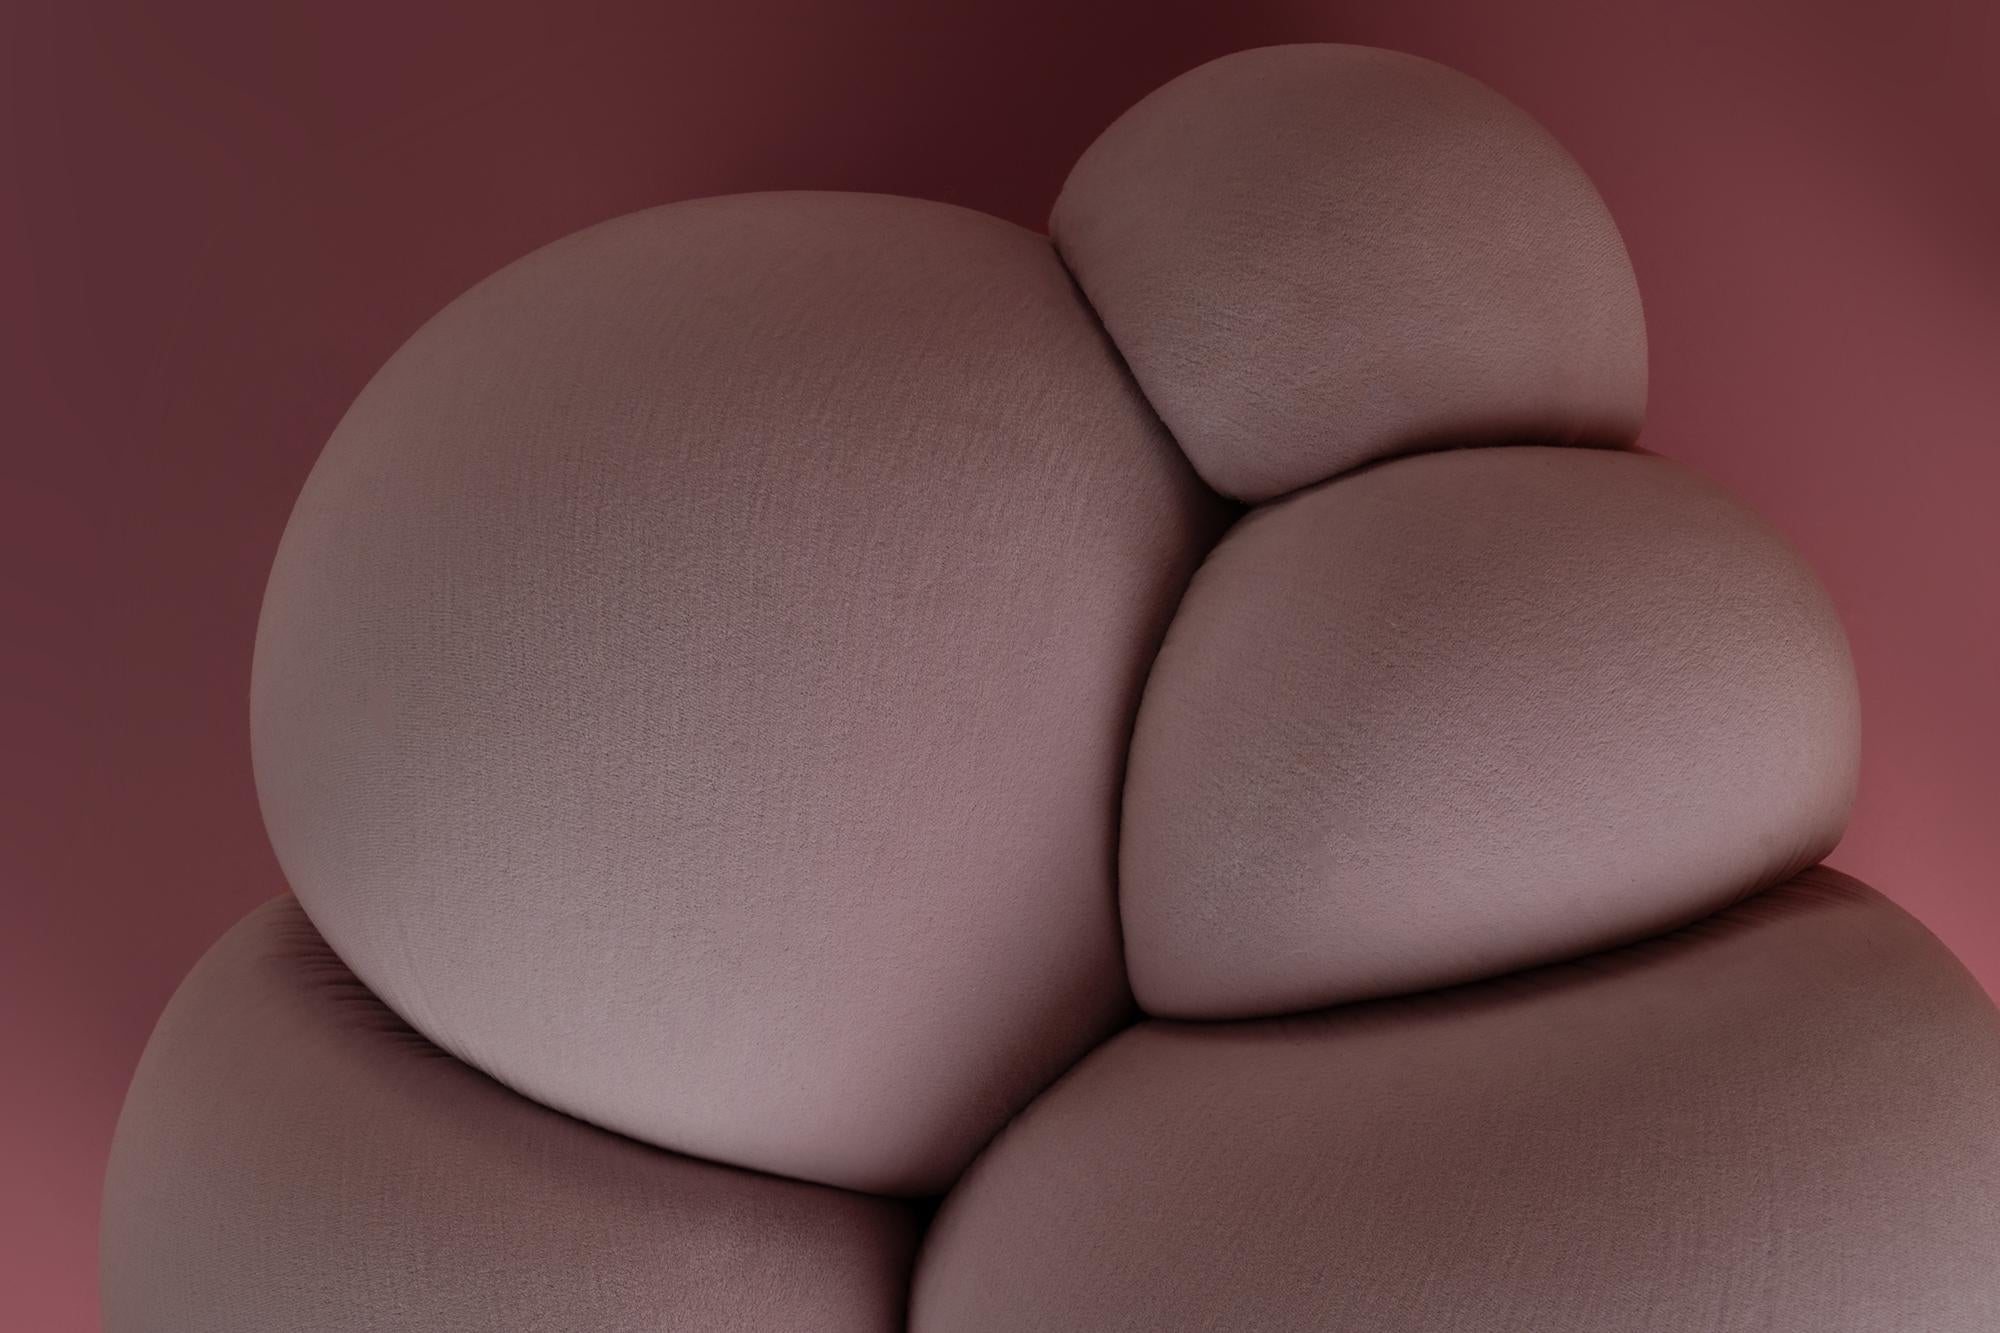 Portuguese Peaches Pouffe by Lara Bohinc, Pink Velvet Fabric, Organic Shape, stool For Sale